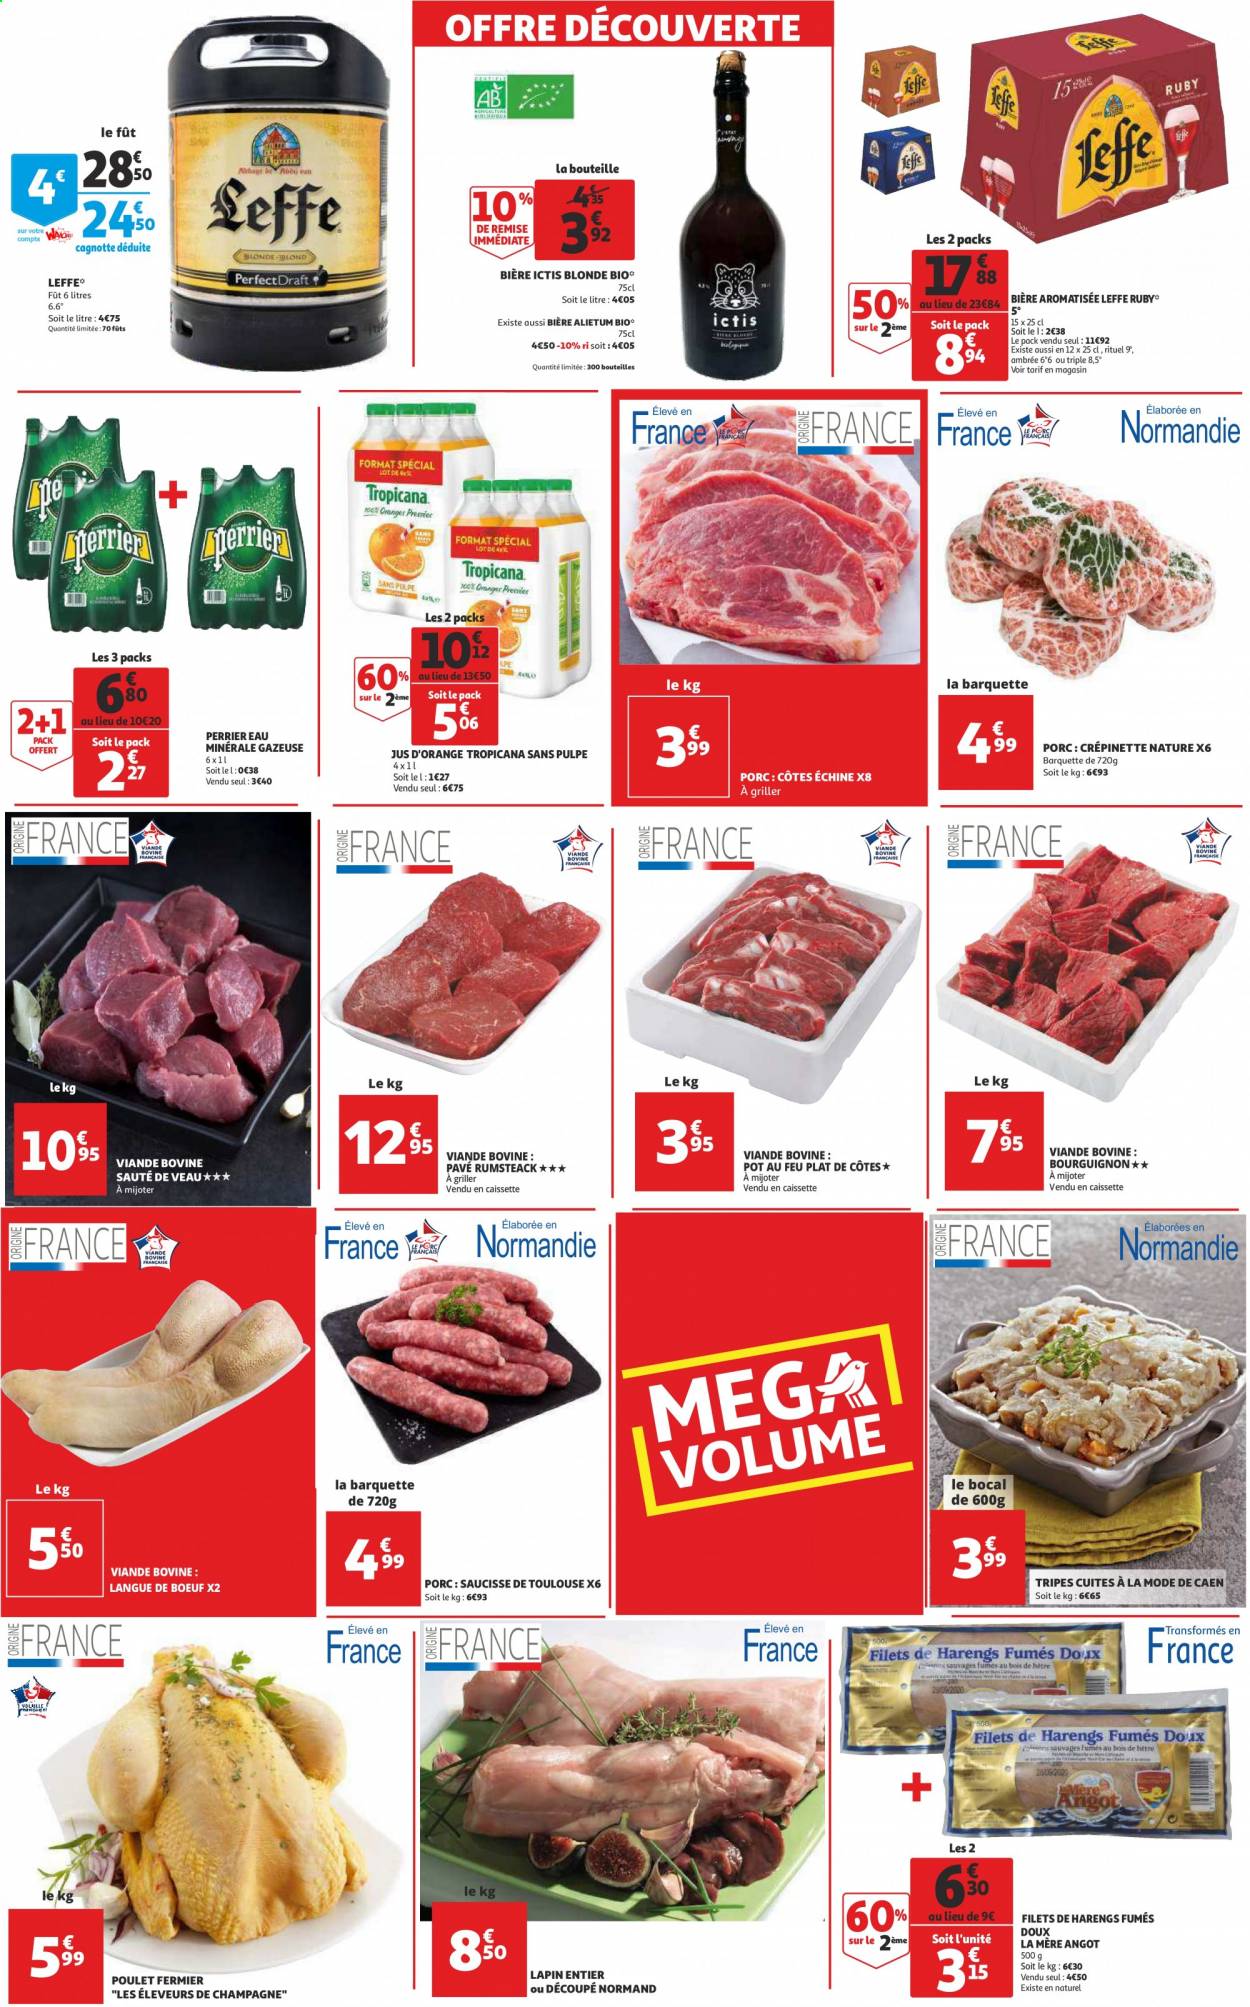 Catalogue Auchan - 05.01.2021 - 12.01.2021. 